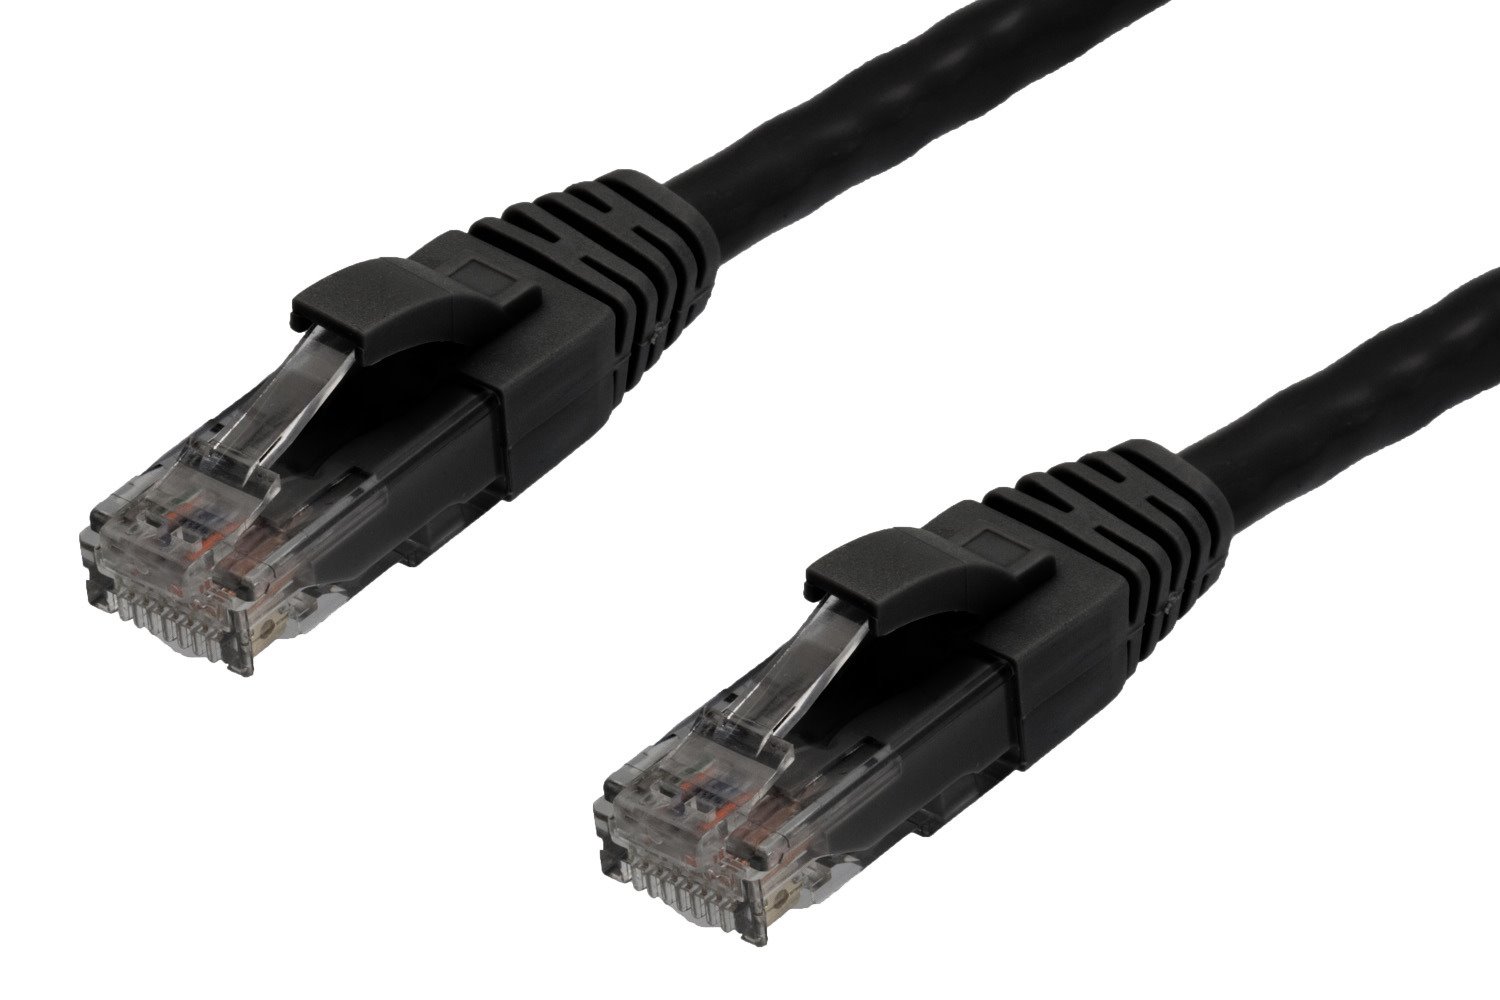 4Cabling 3M RJ45 Cat6 Ethernet Cable. Black